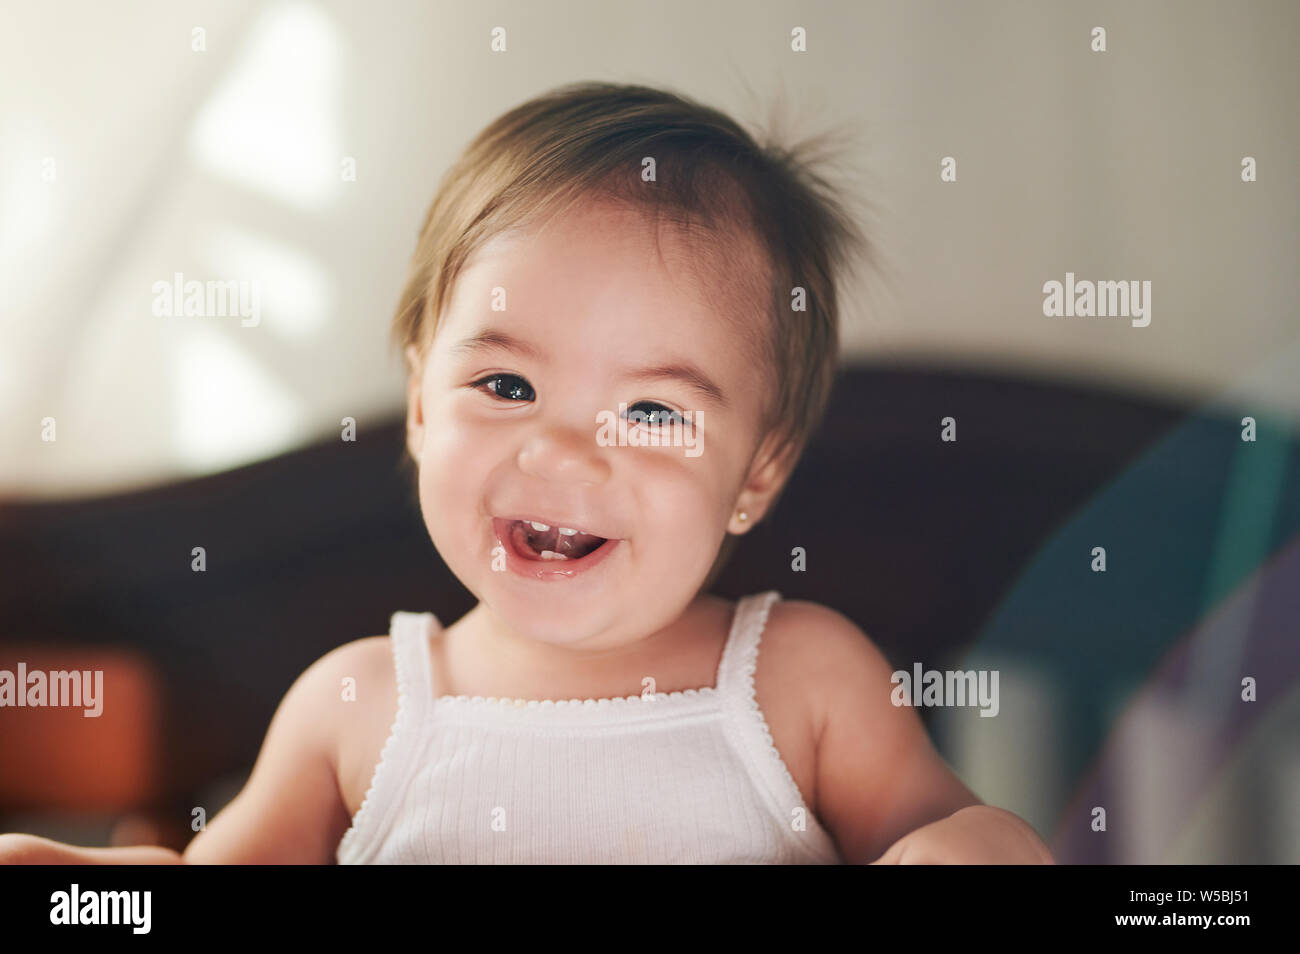 Happy smile baby girl in white t-shirt portrait Stock Photo